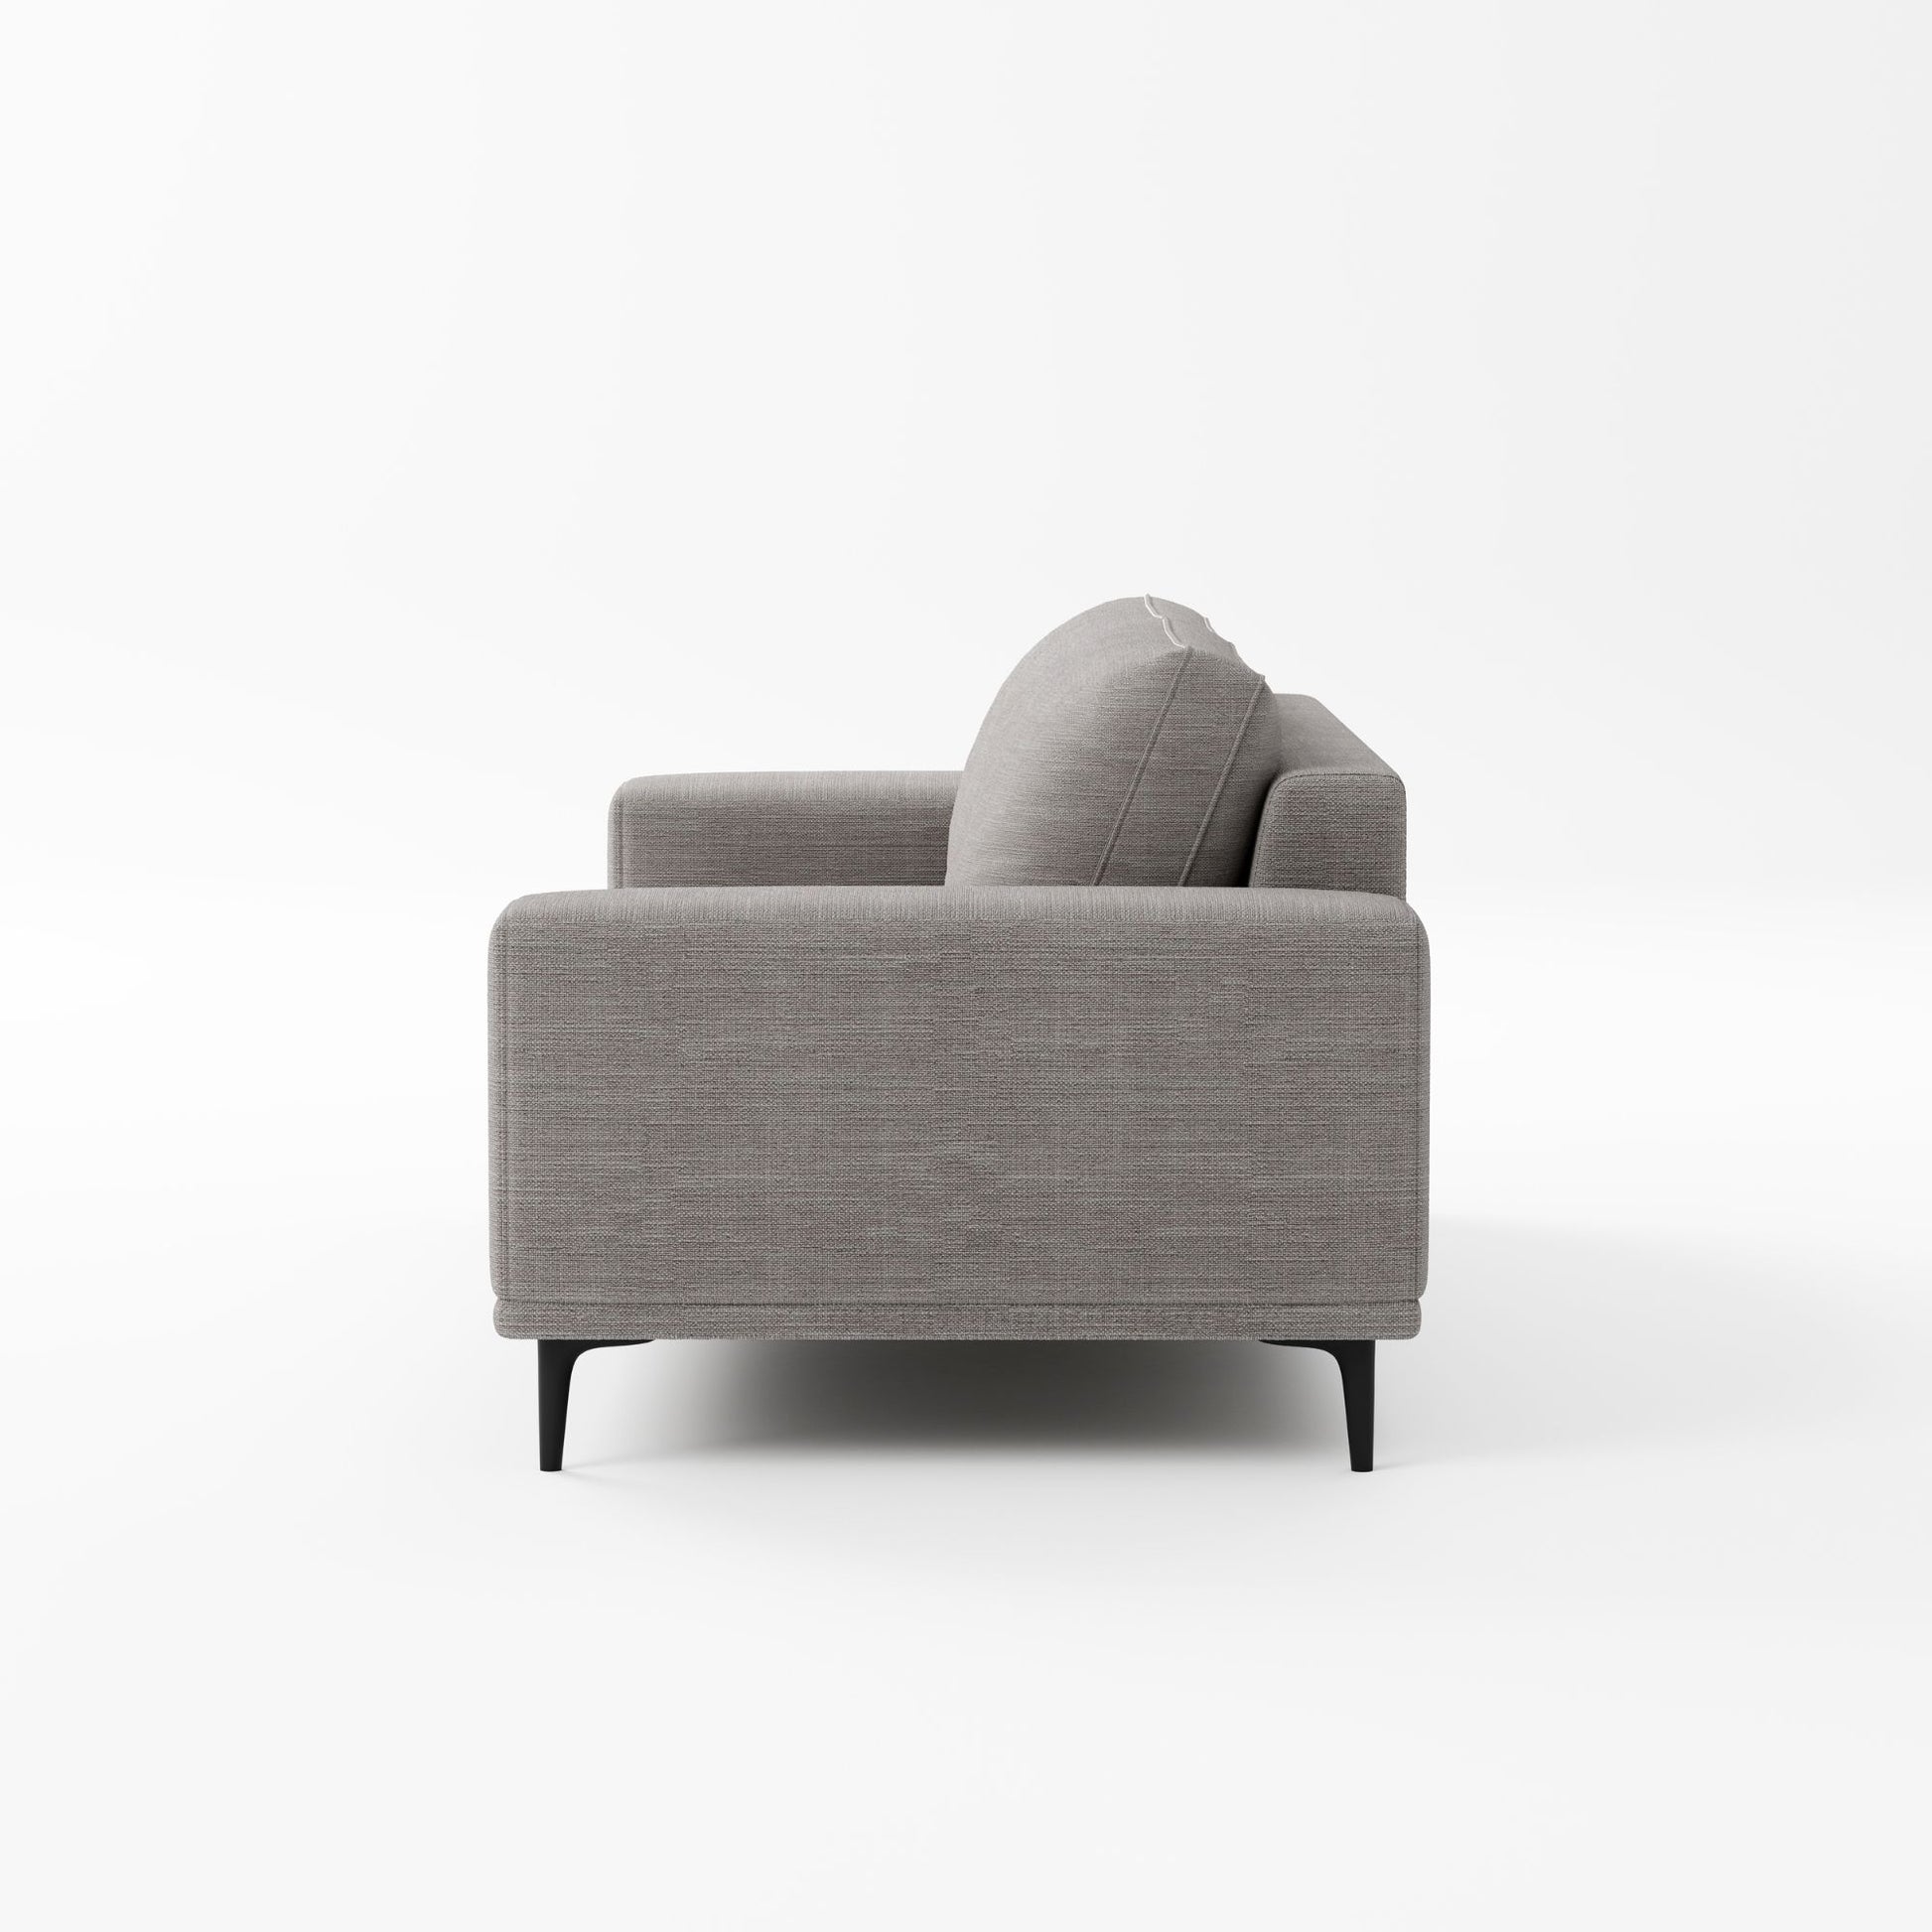 Calm grey polyester blend fabric sofa